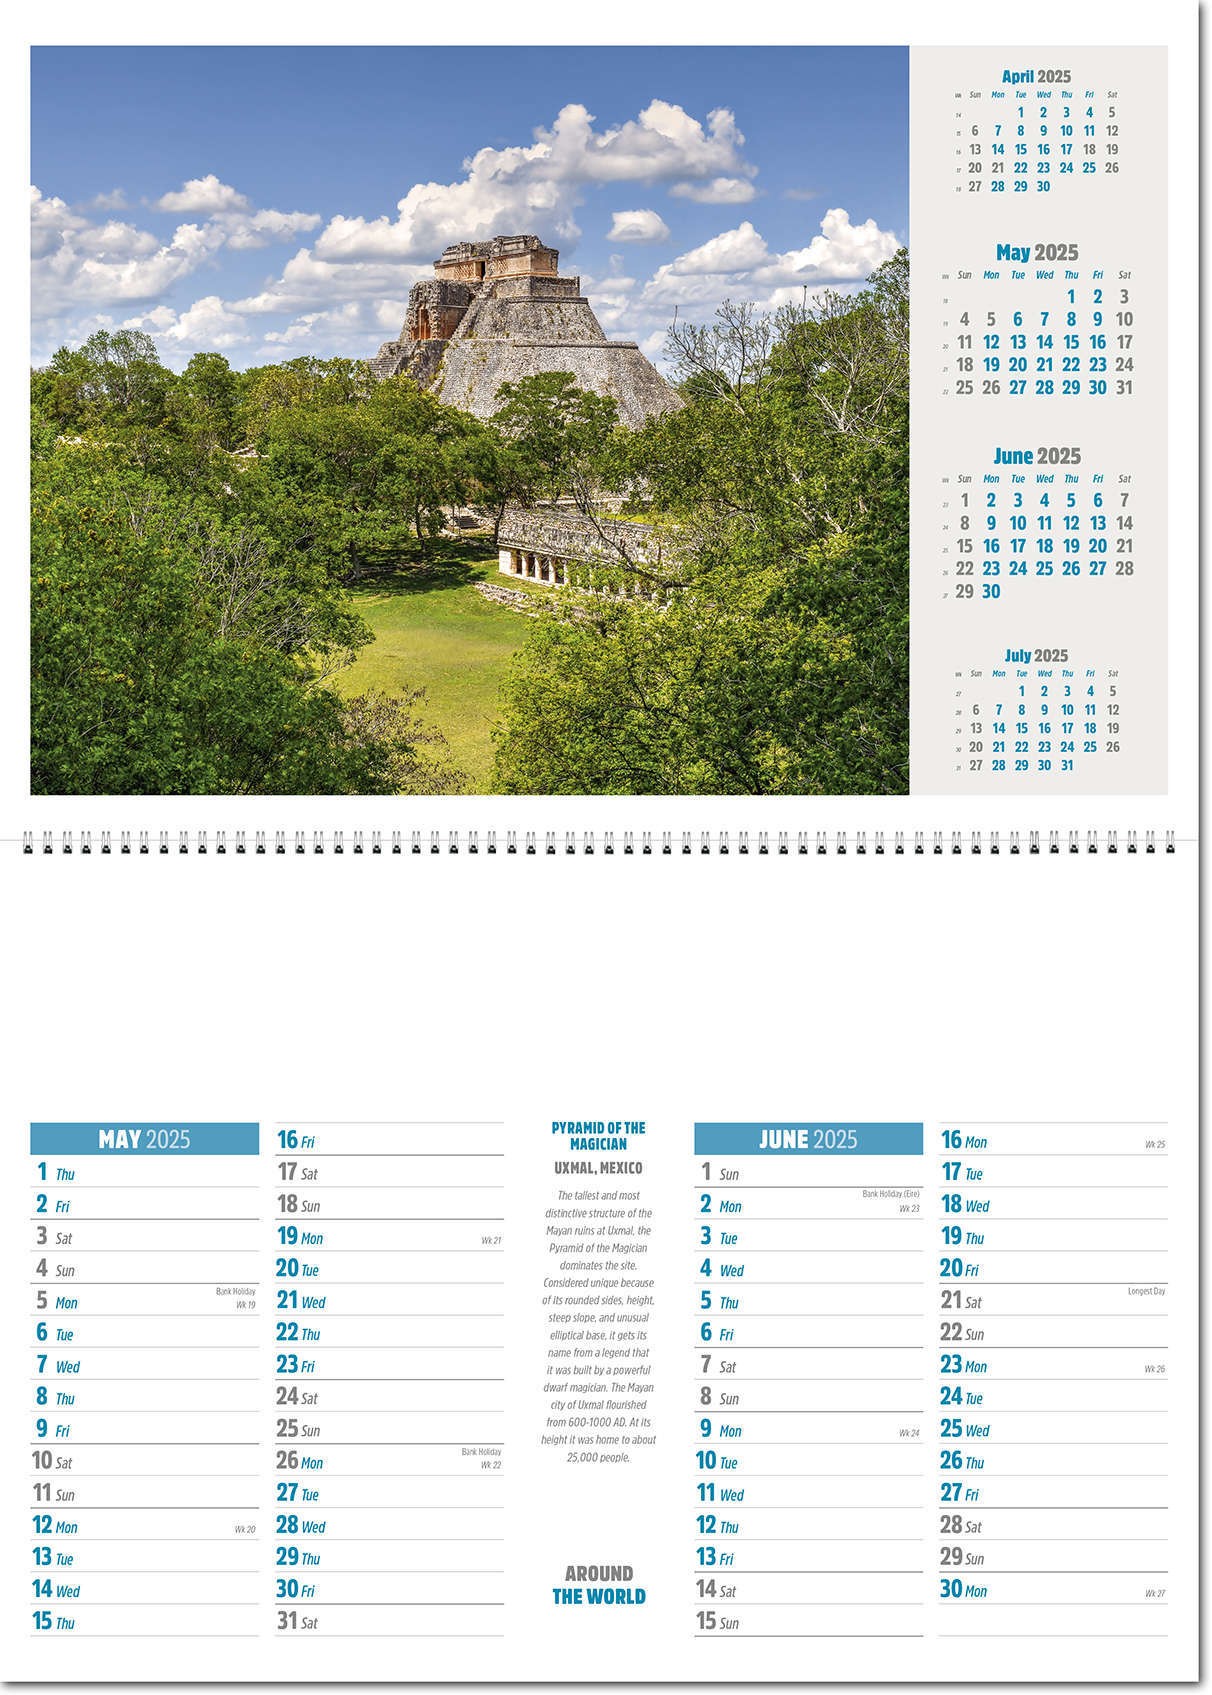 Around the World Postage Saver Calendar